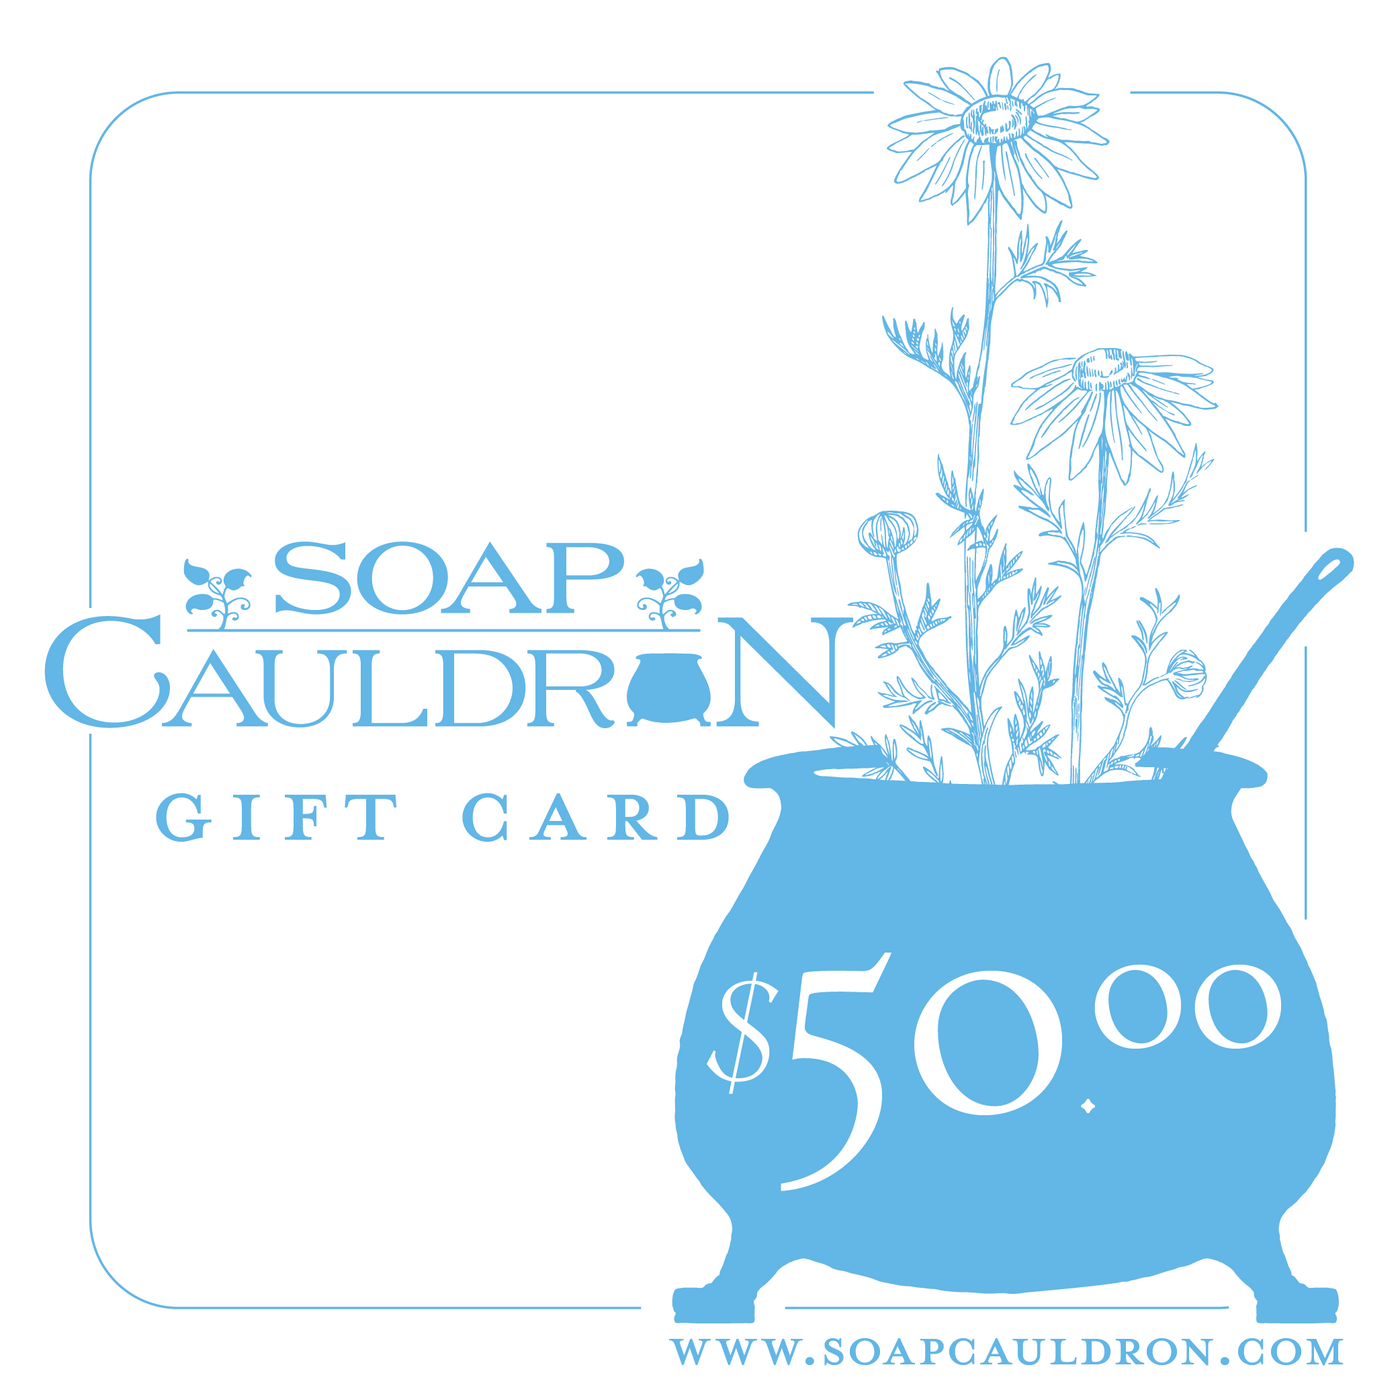 Soap Cauldron Gift Cards